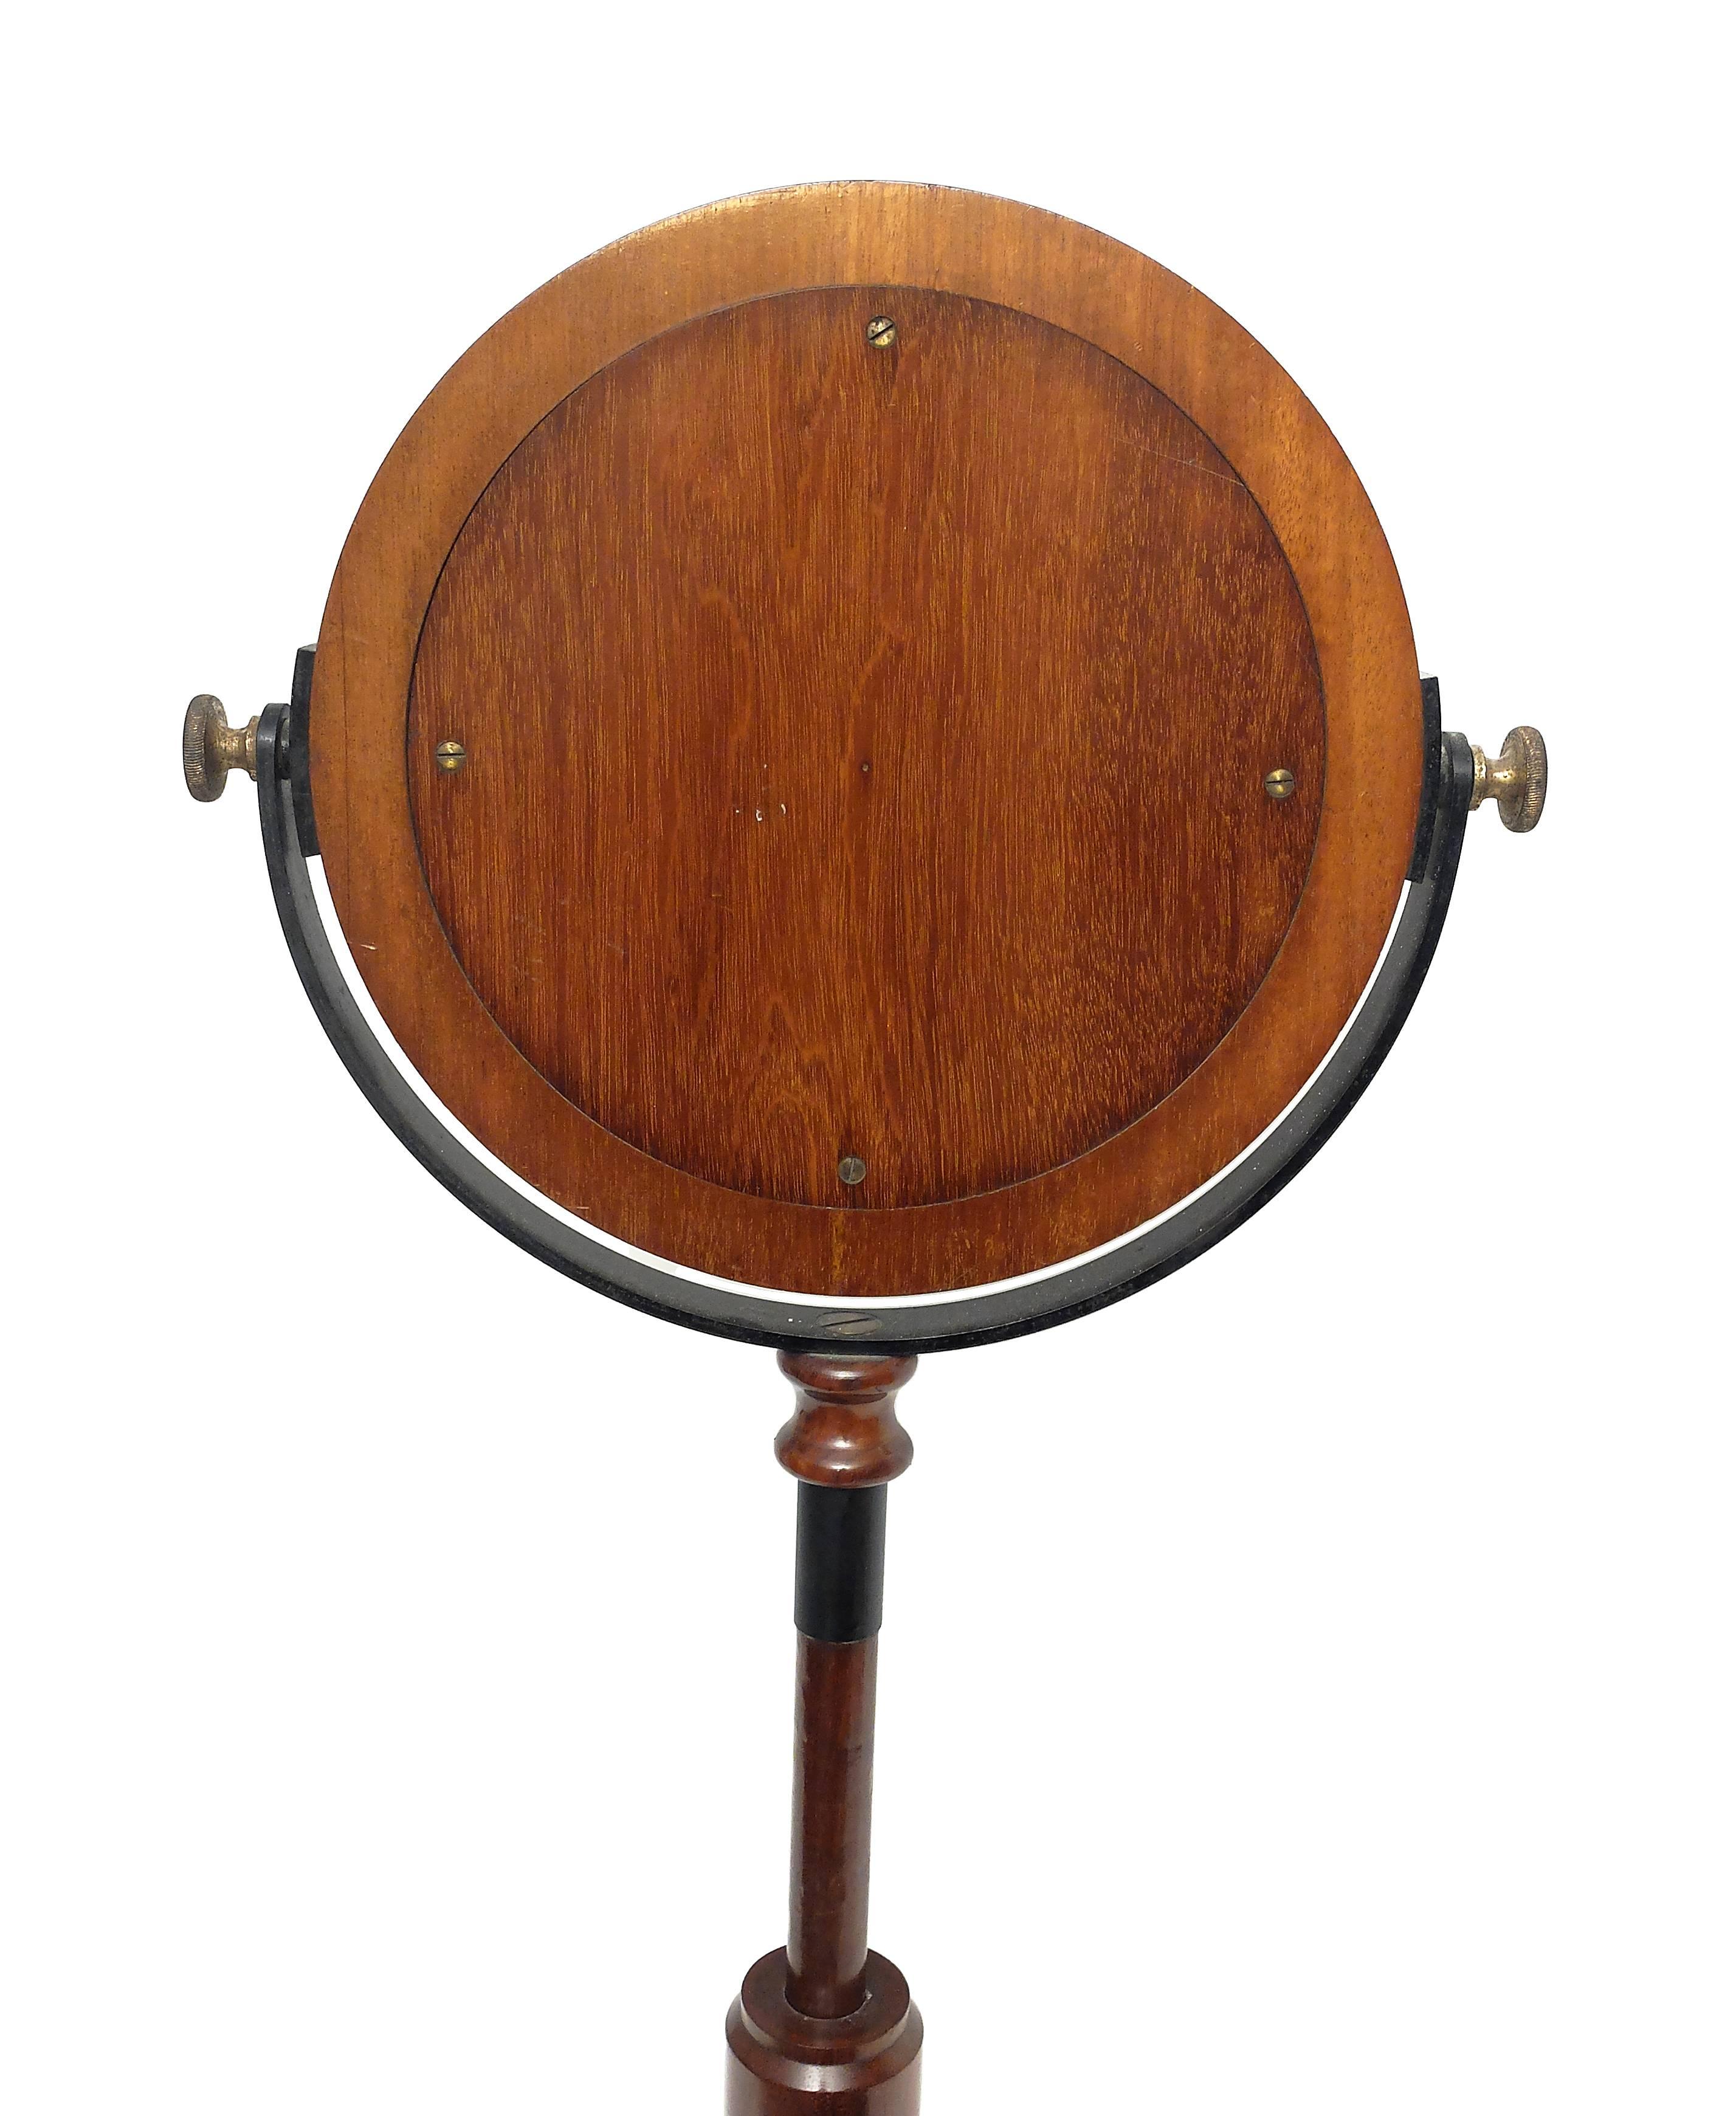 Metal Adjustable Table Mirror on Wooden Base, France, circa 1880